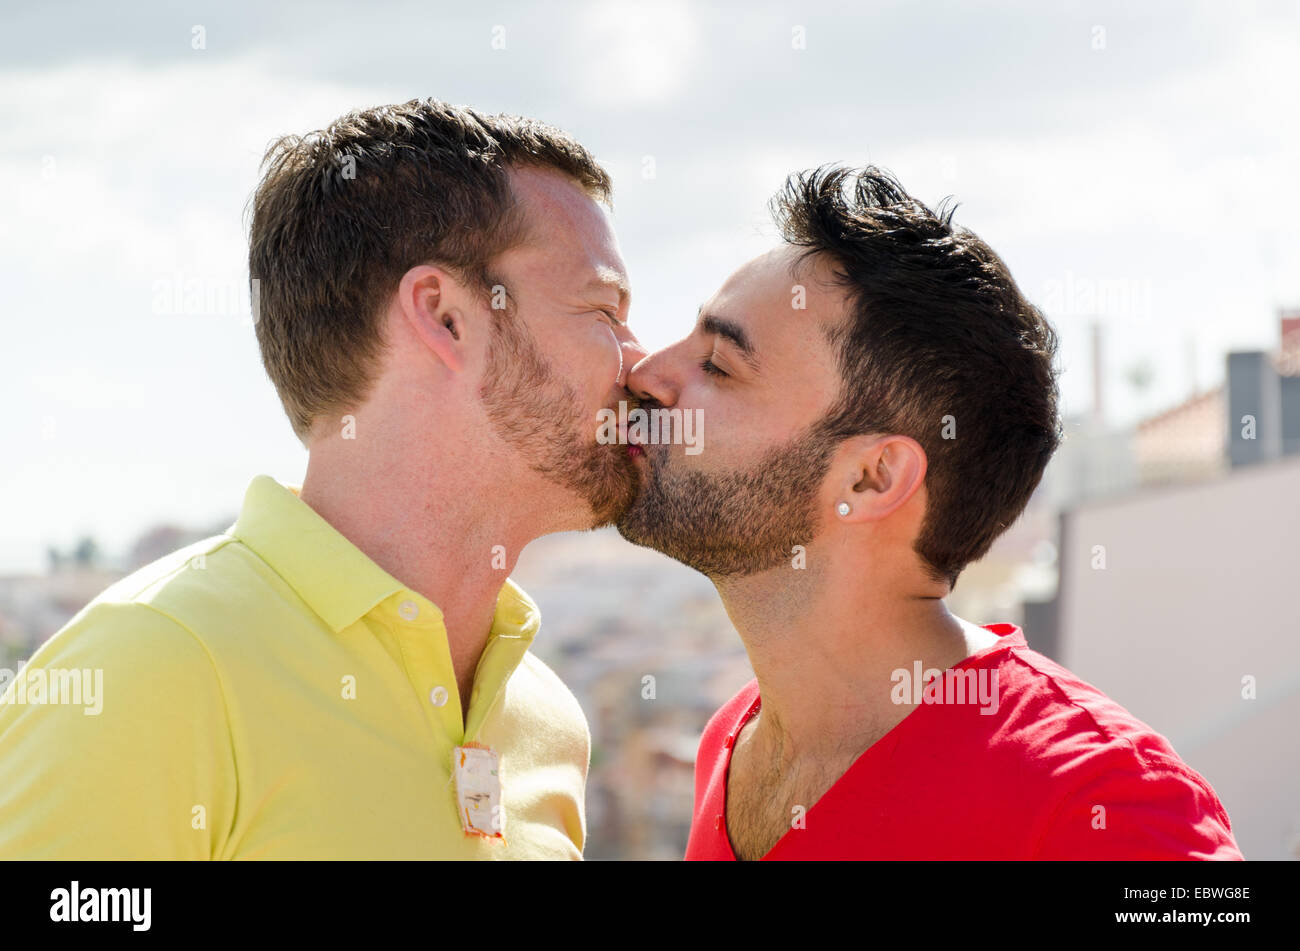 Pics Of Gay People Kissing 19